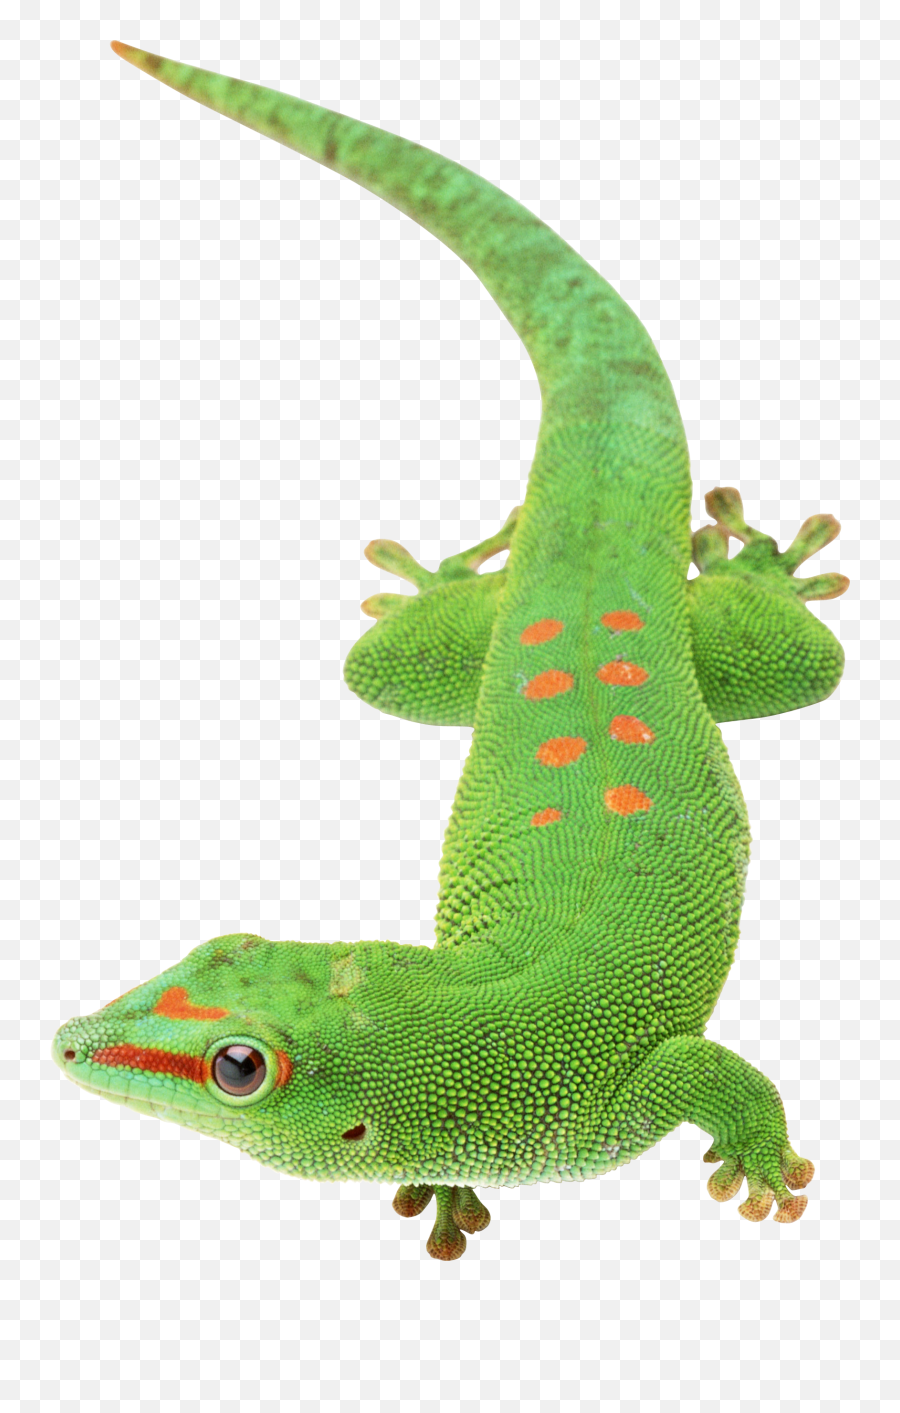 Lizard Png Transparent Images Free Download